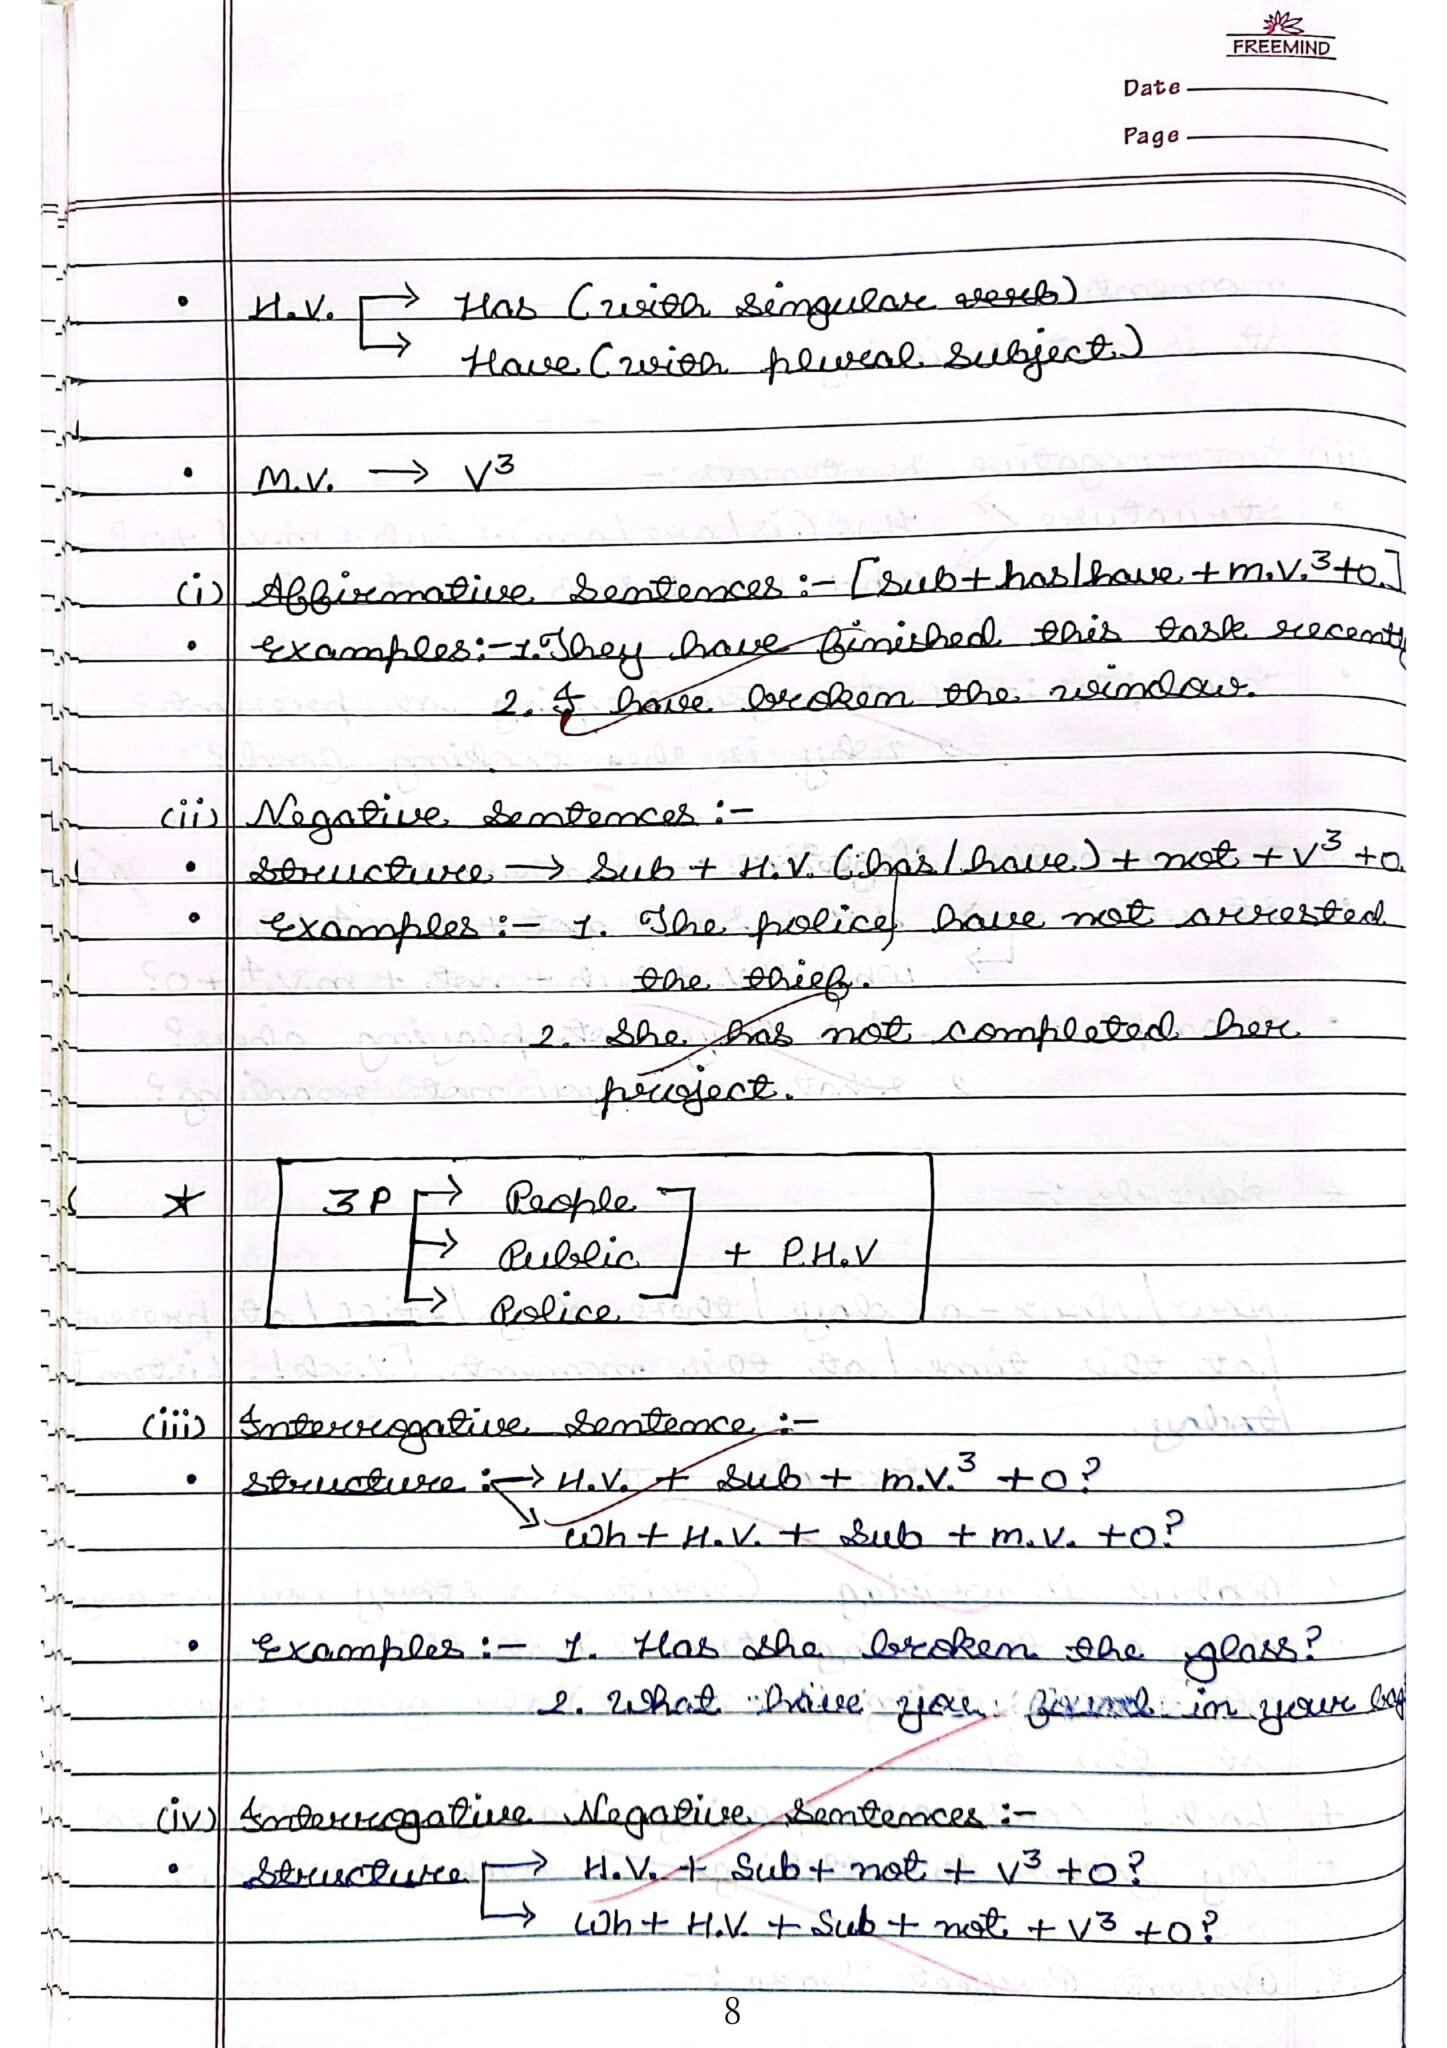 [pdf] Tense handwritten notes, Handwritten notes pdf, Tense notes ...